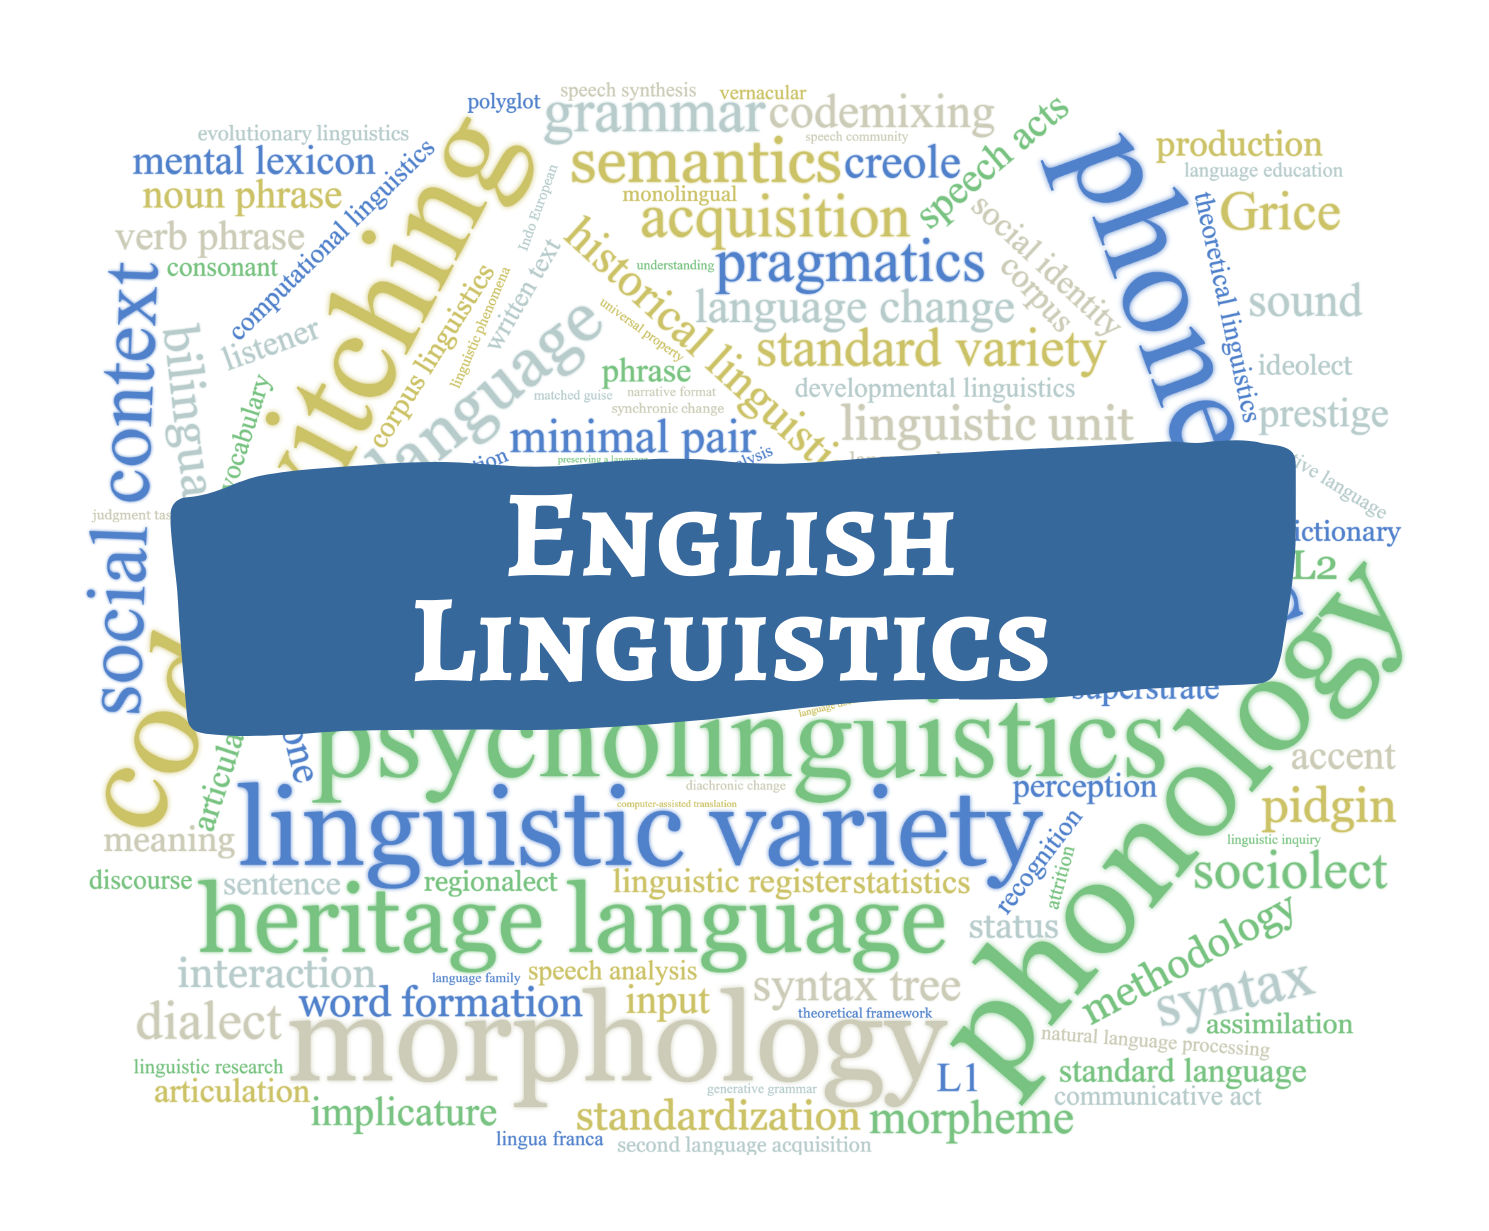 English Linguistics final new 2 plus Rand.png